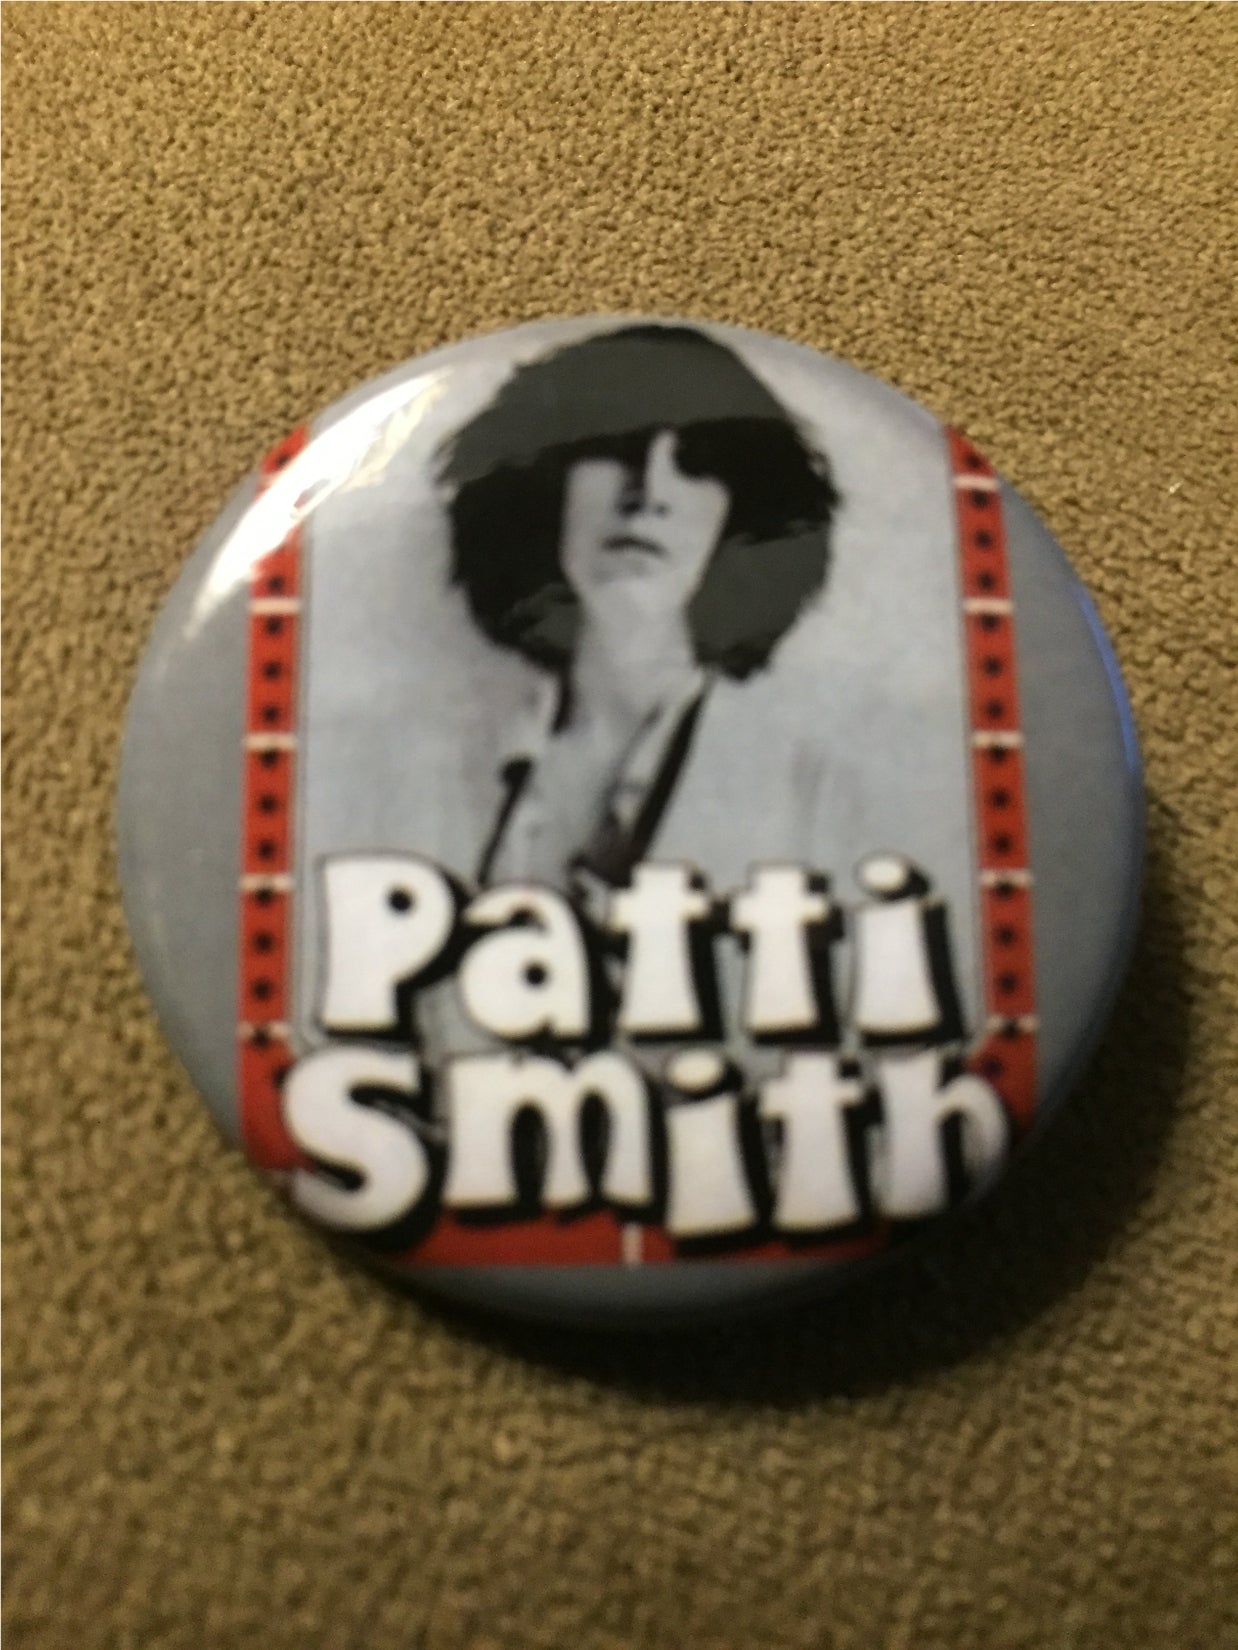 Patti Smith 1.5" pinback button